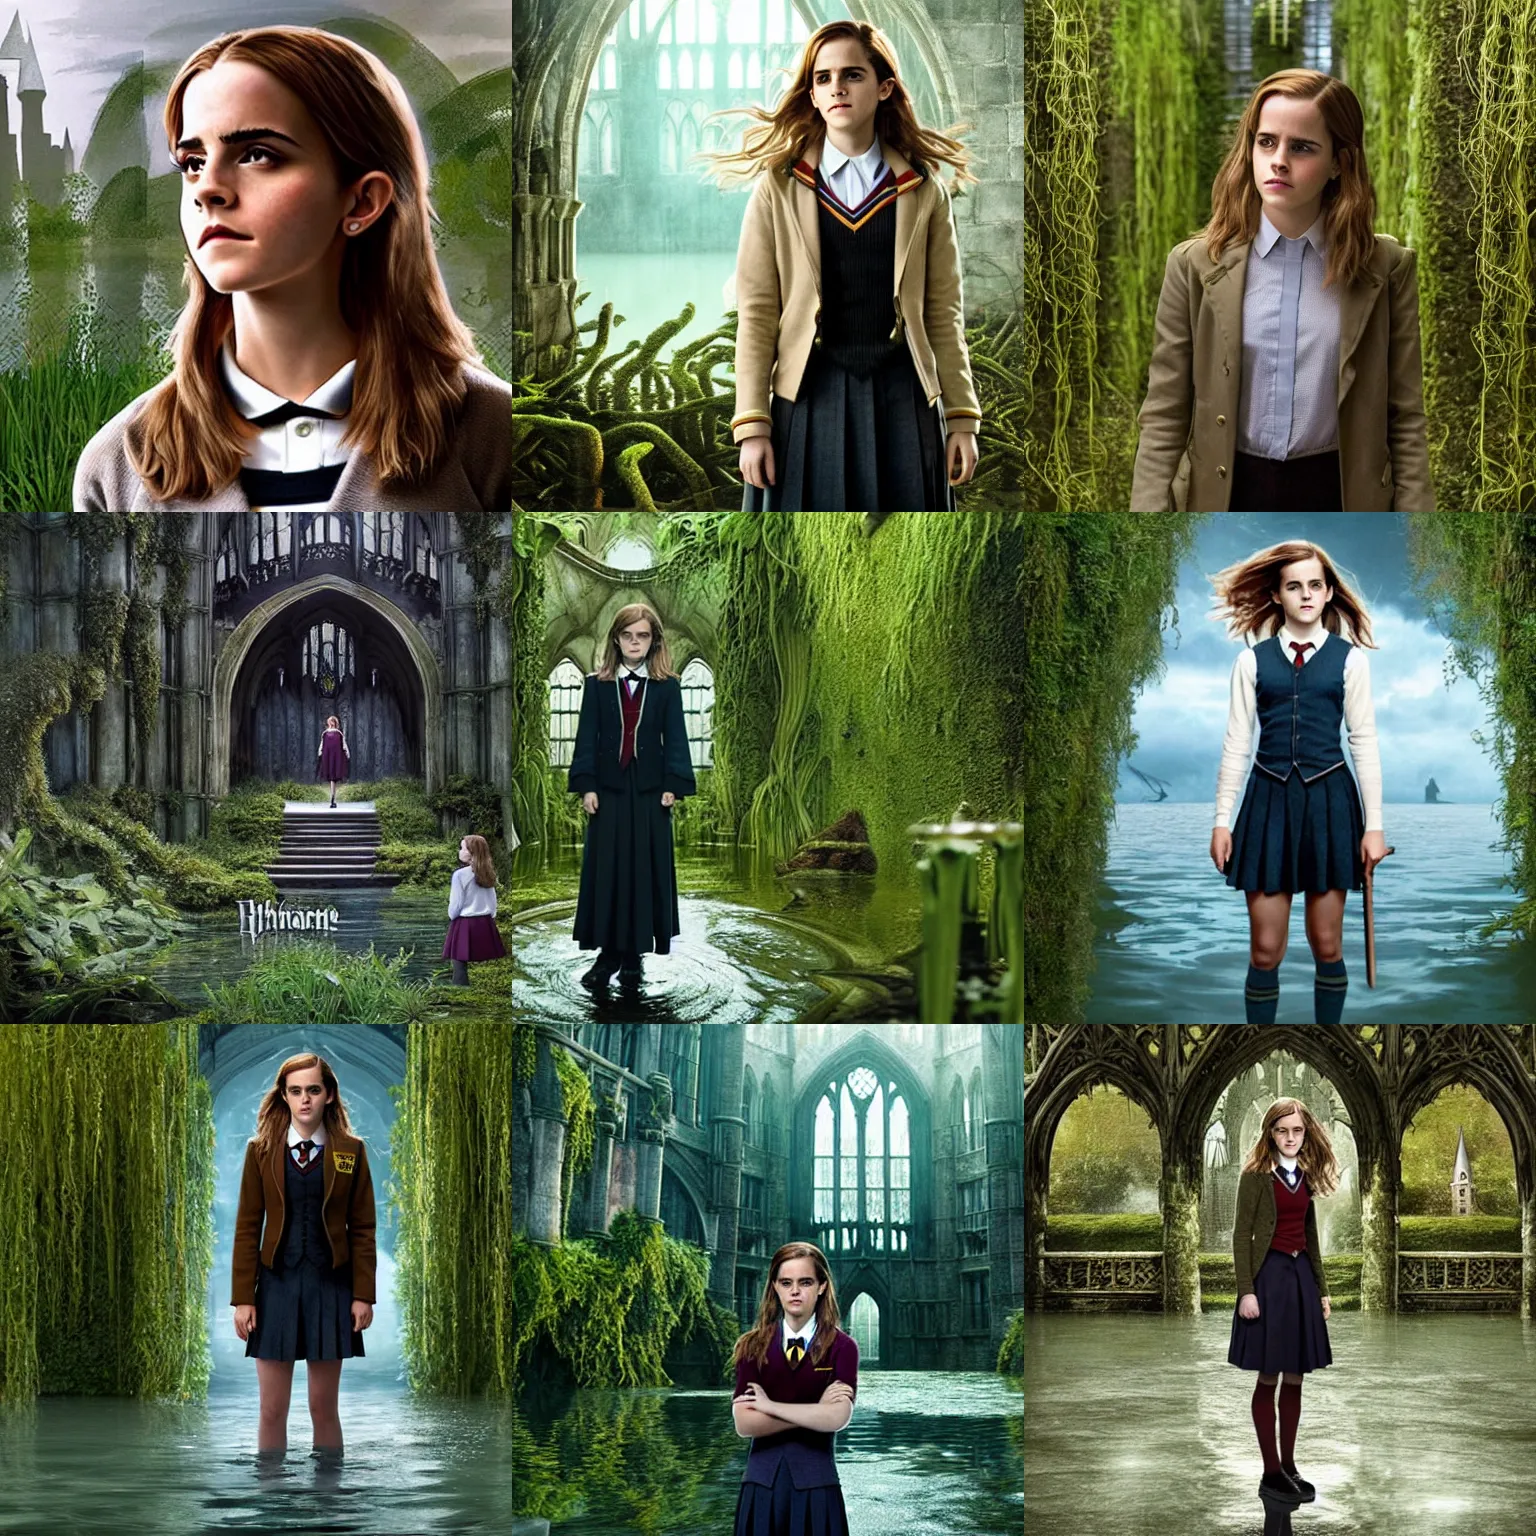 Prompt: emma watson as hermione granger, wearing school uniform, alone, in an empty dark flooded hogwarts castle overgrown with aquatic plants